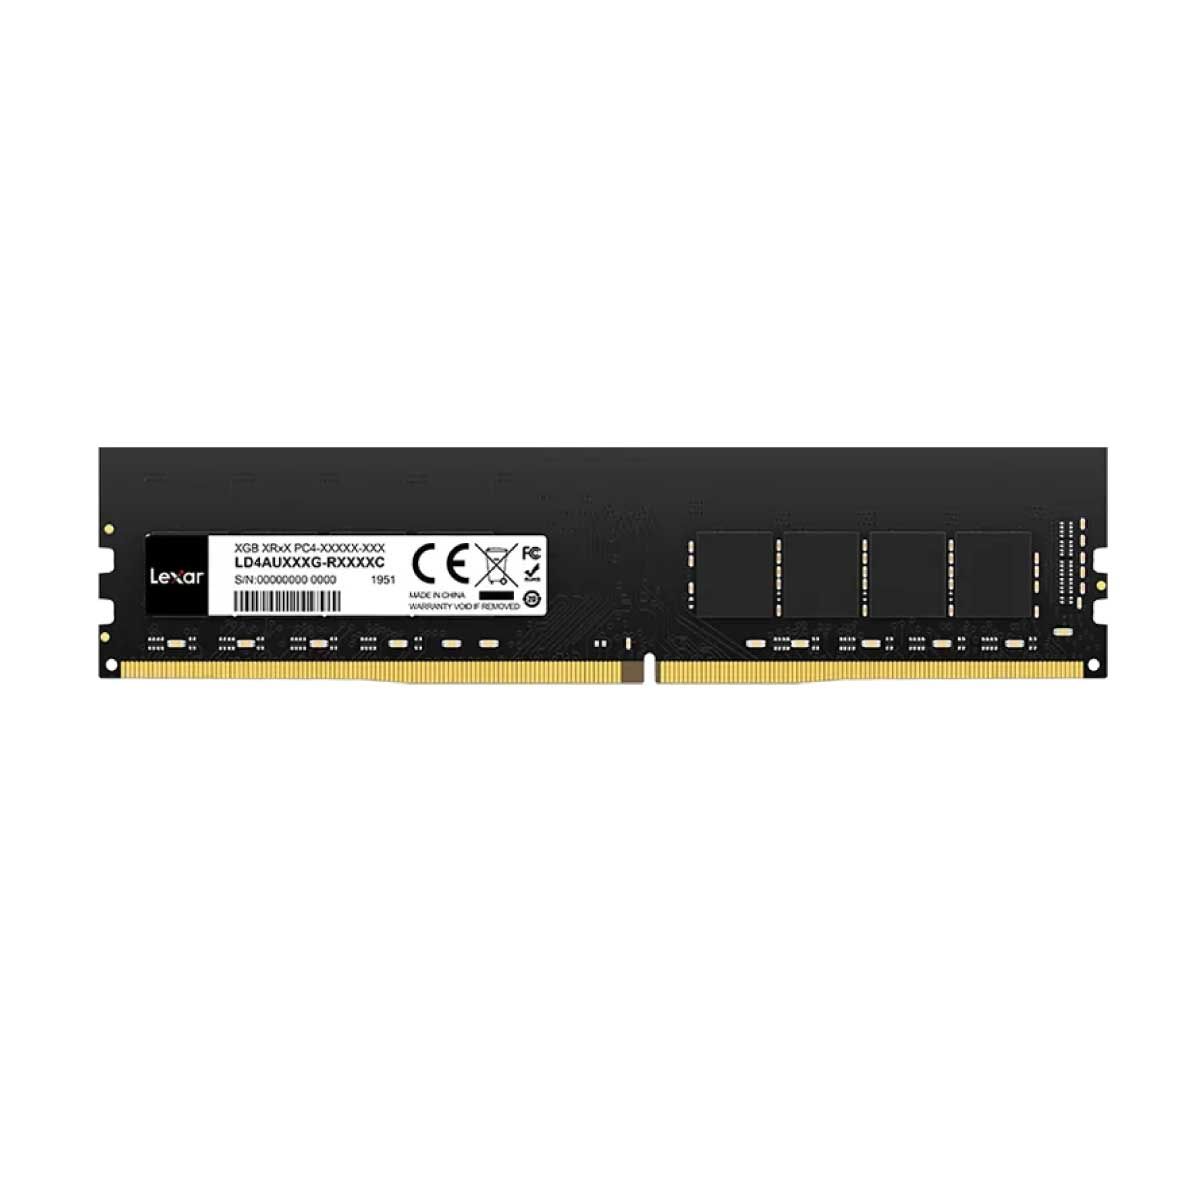 LEXAR DDR4-3200/2666 UDIMM DESKTOP MEMORY 4GB